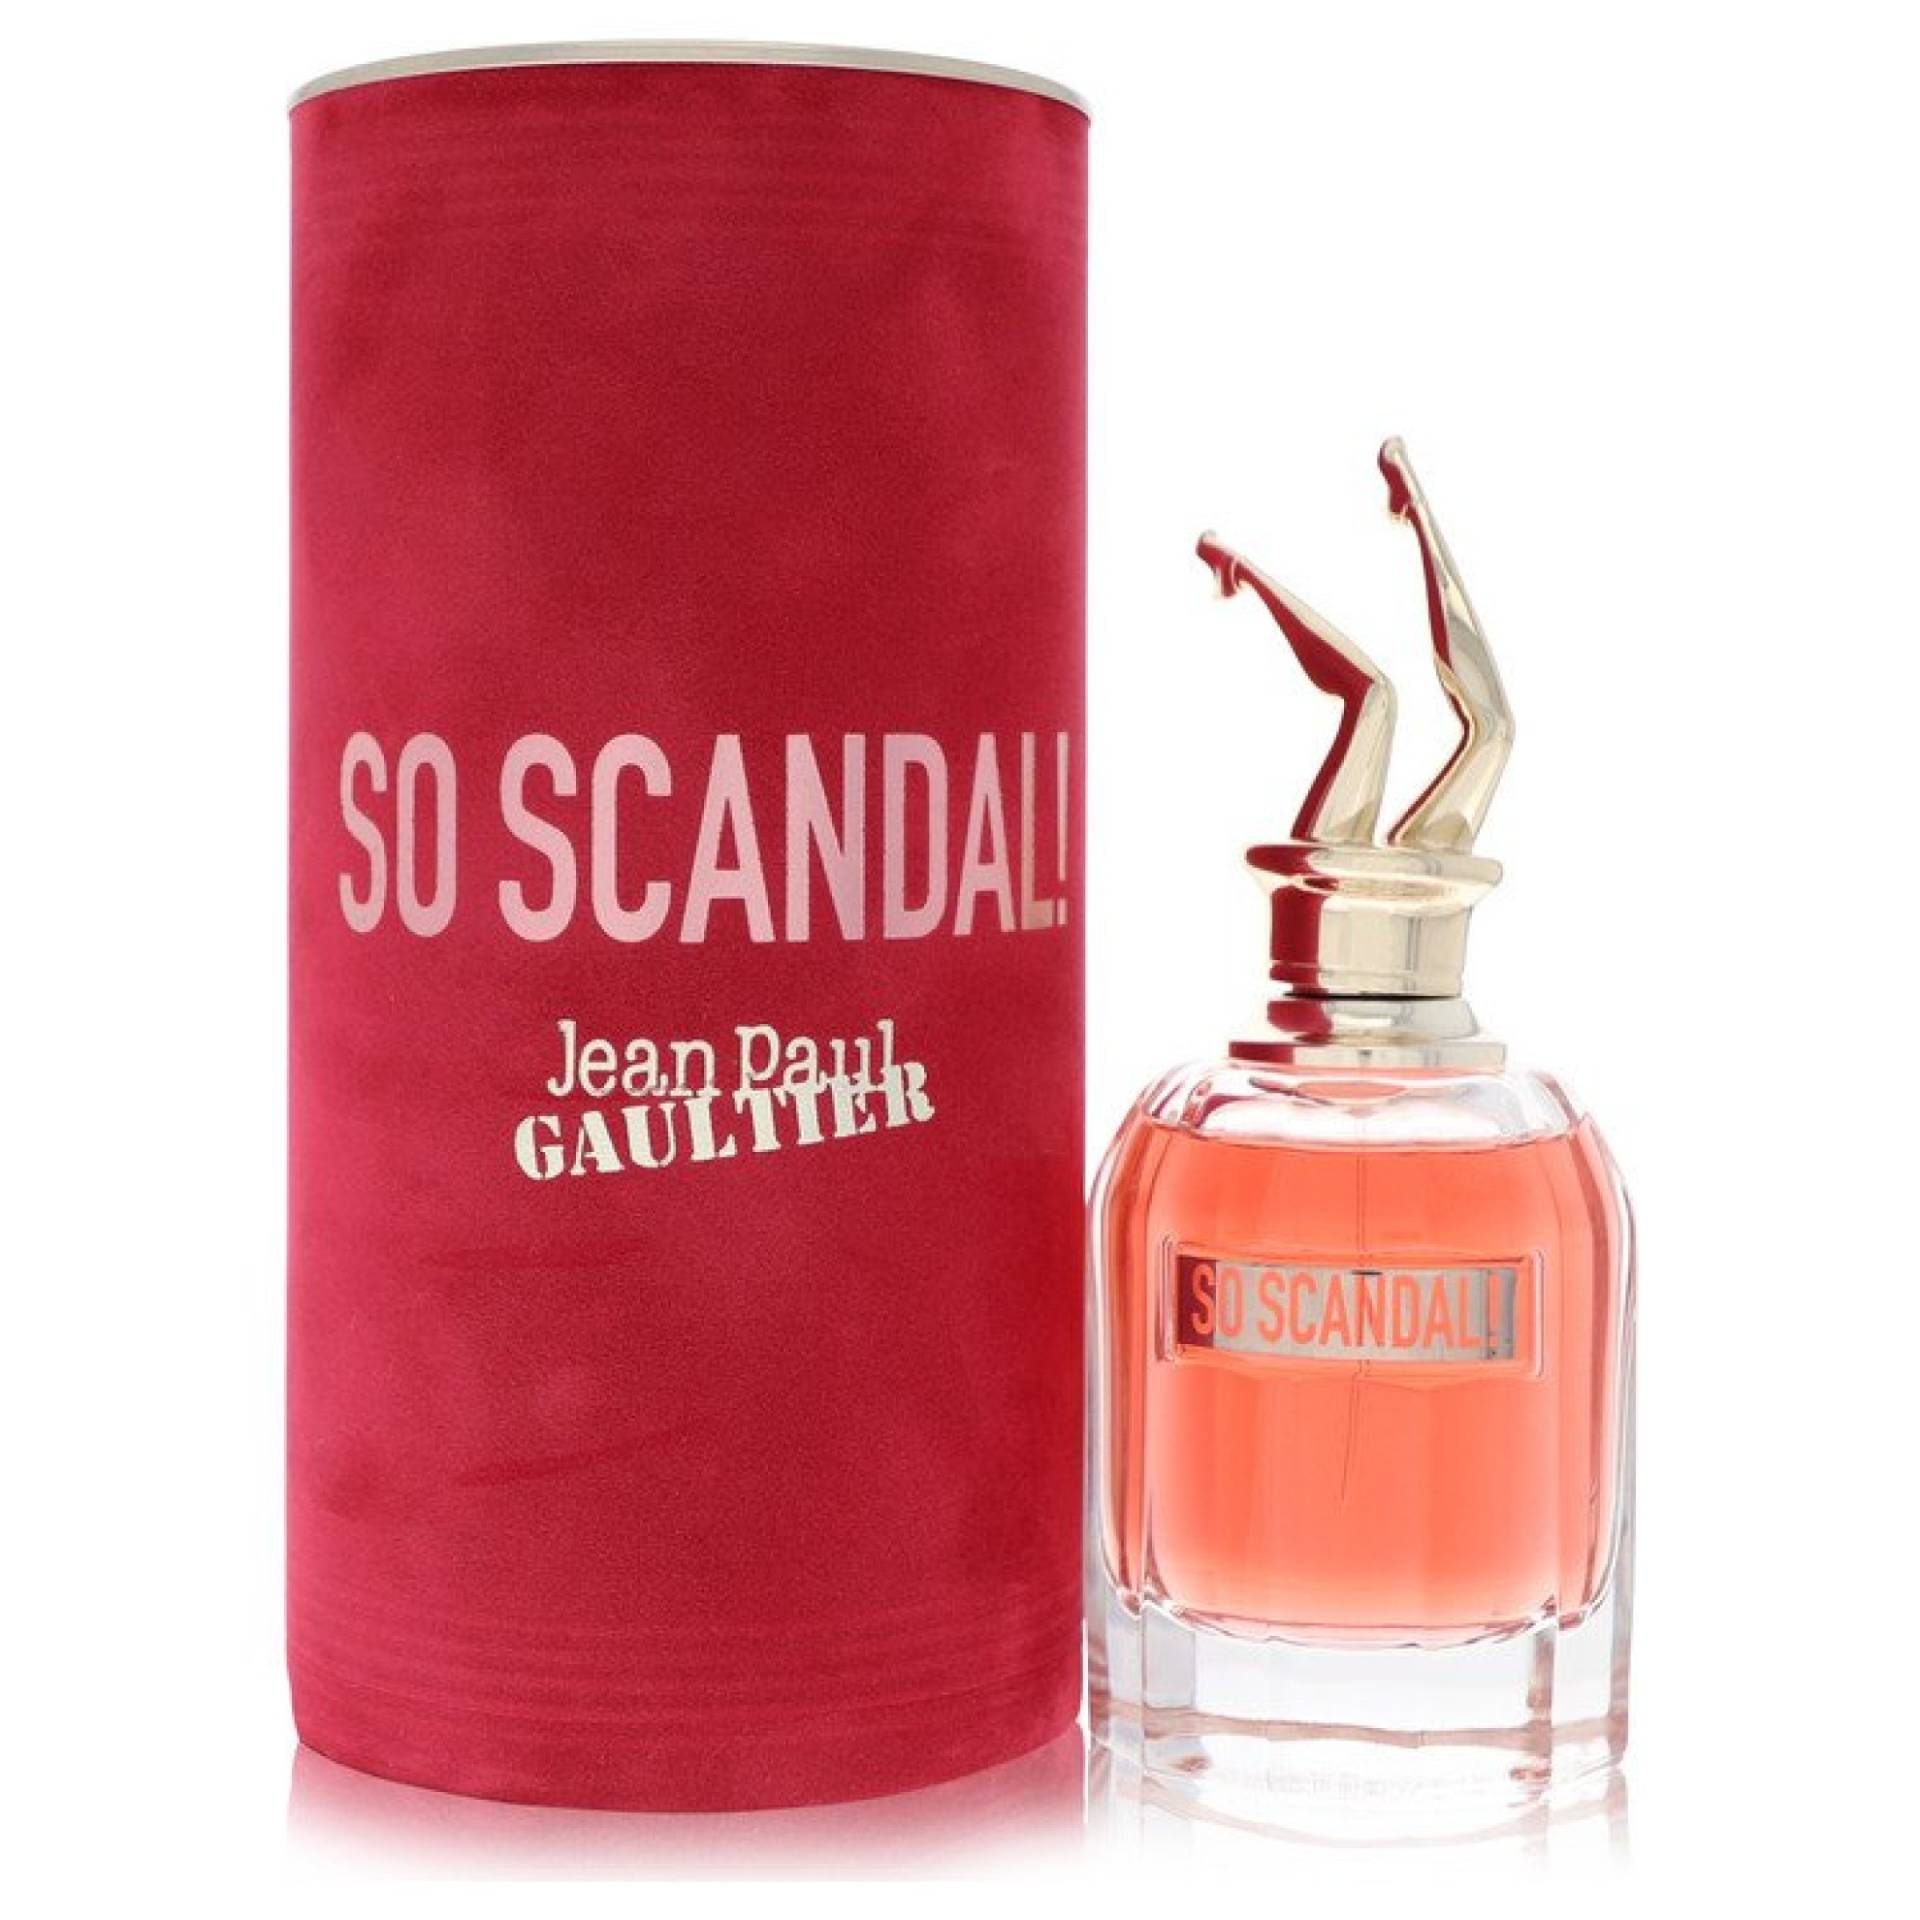 Jean Paul Gaultier So Scandal! Eau De Parfum Spray (unboxed) 80 ml von Jean Paul Gaultier